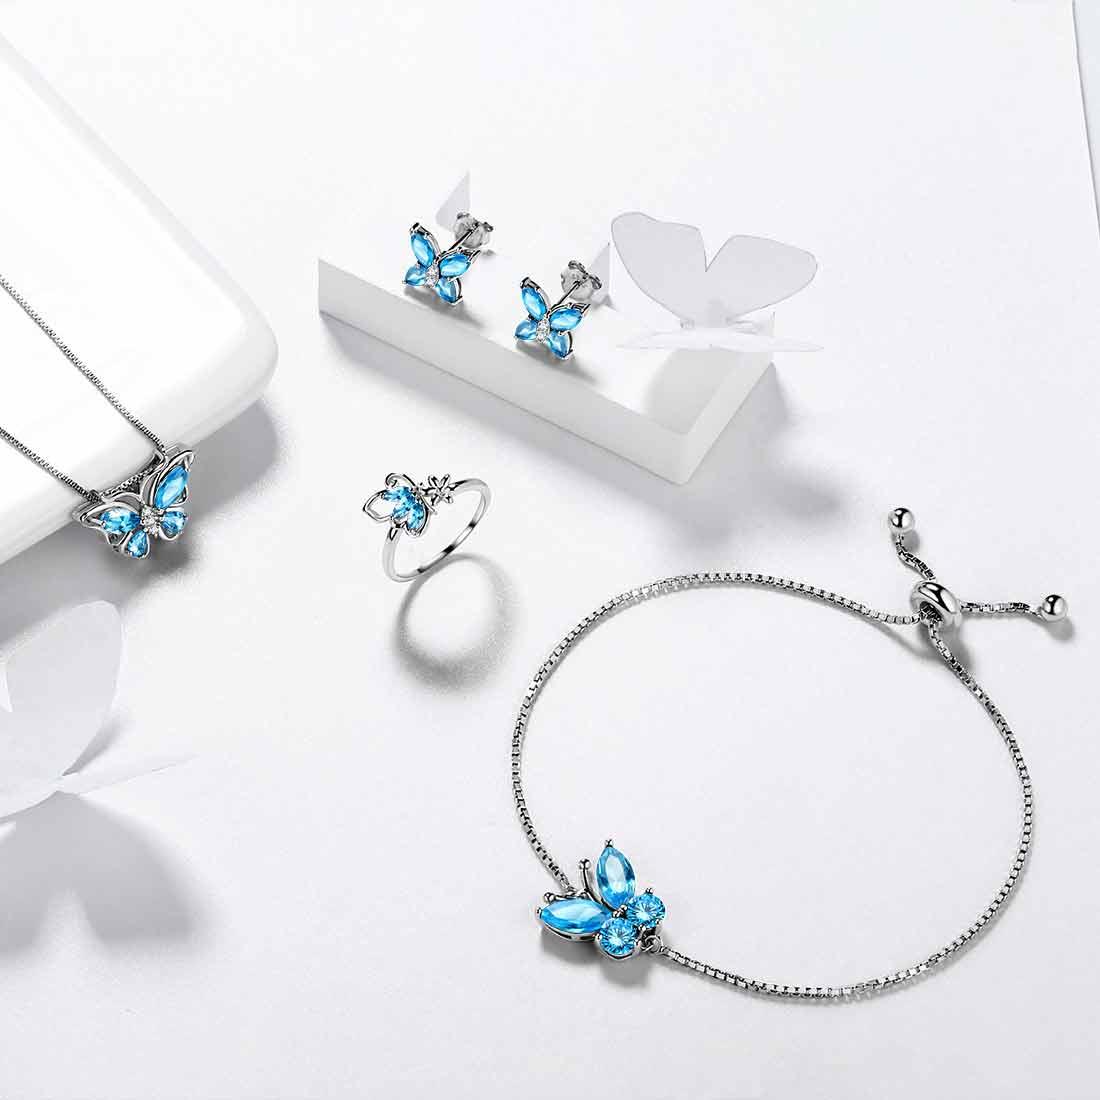 Butterfly Birthstone March Aquamarine Jewelry Set 5PCS - Jewelry Set - Aurora Tears